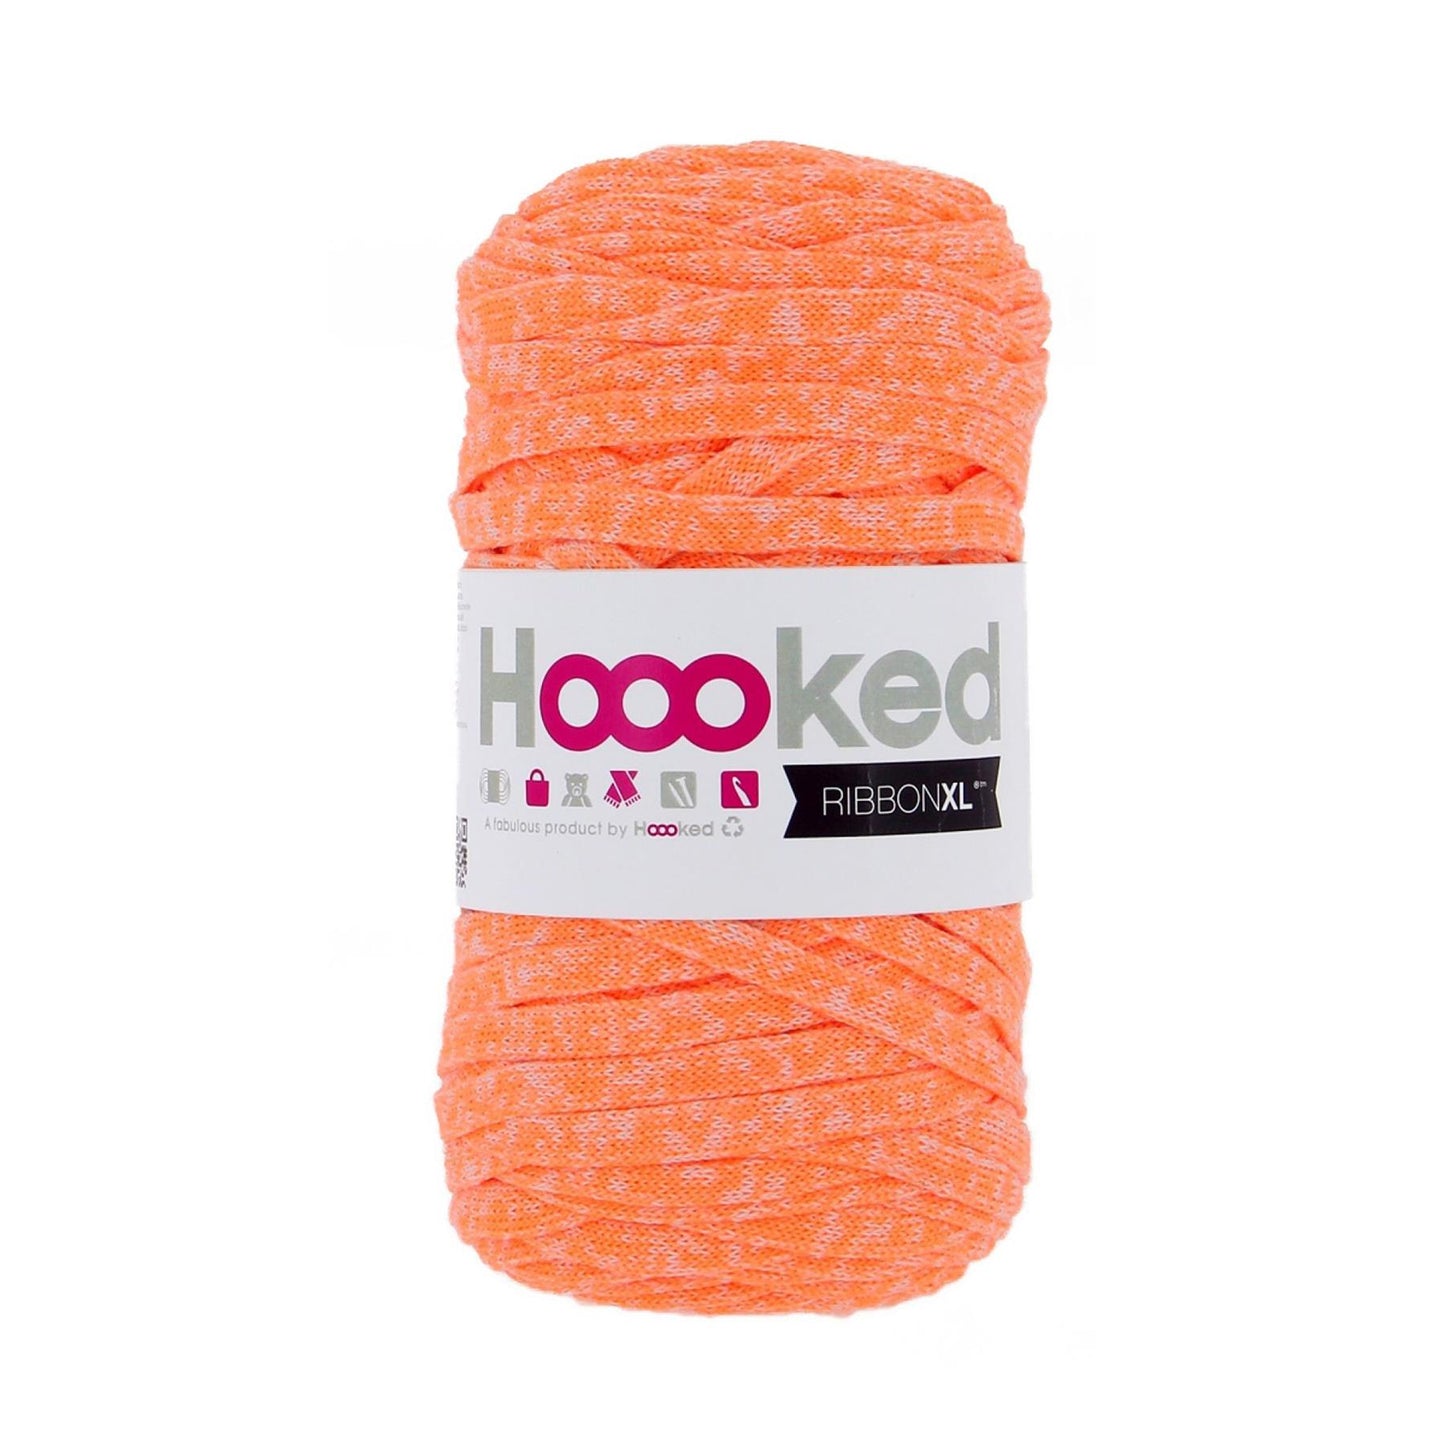 Hoooked RibbonXL Neon Atomic Tangerine Cotton Yarn - 120M 250g